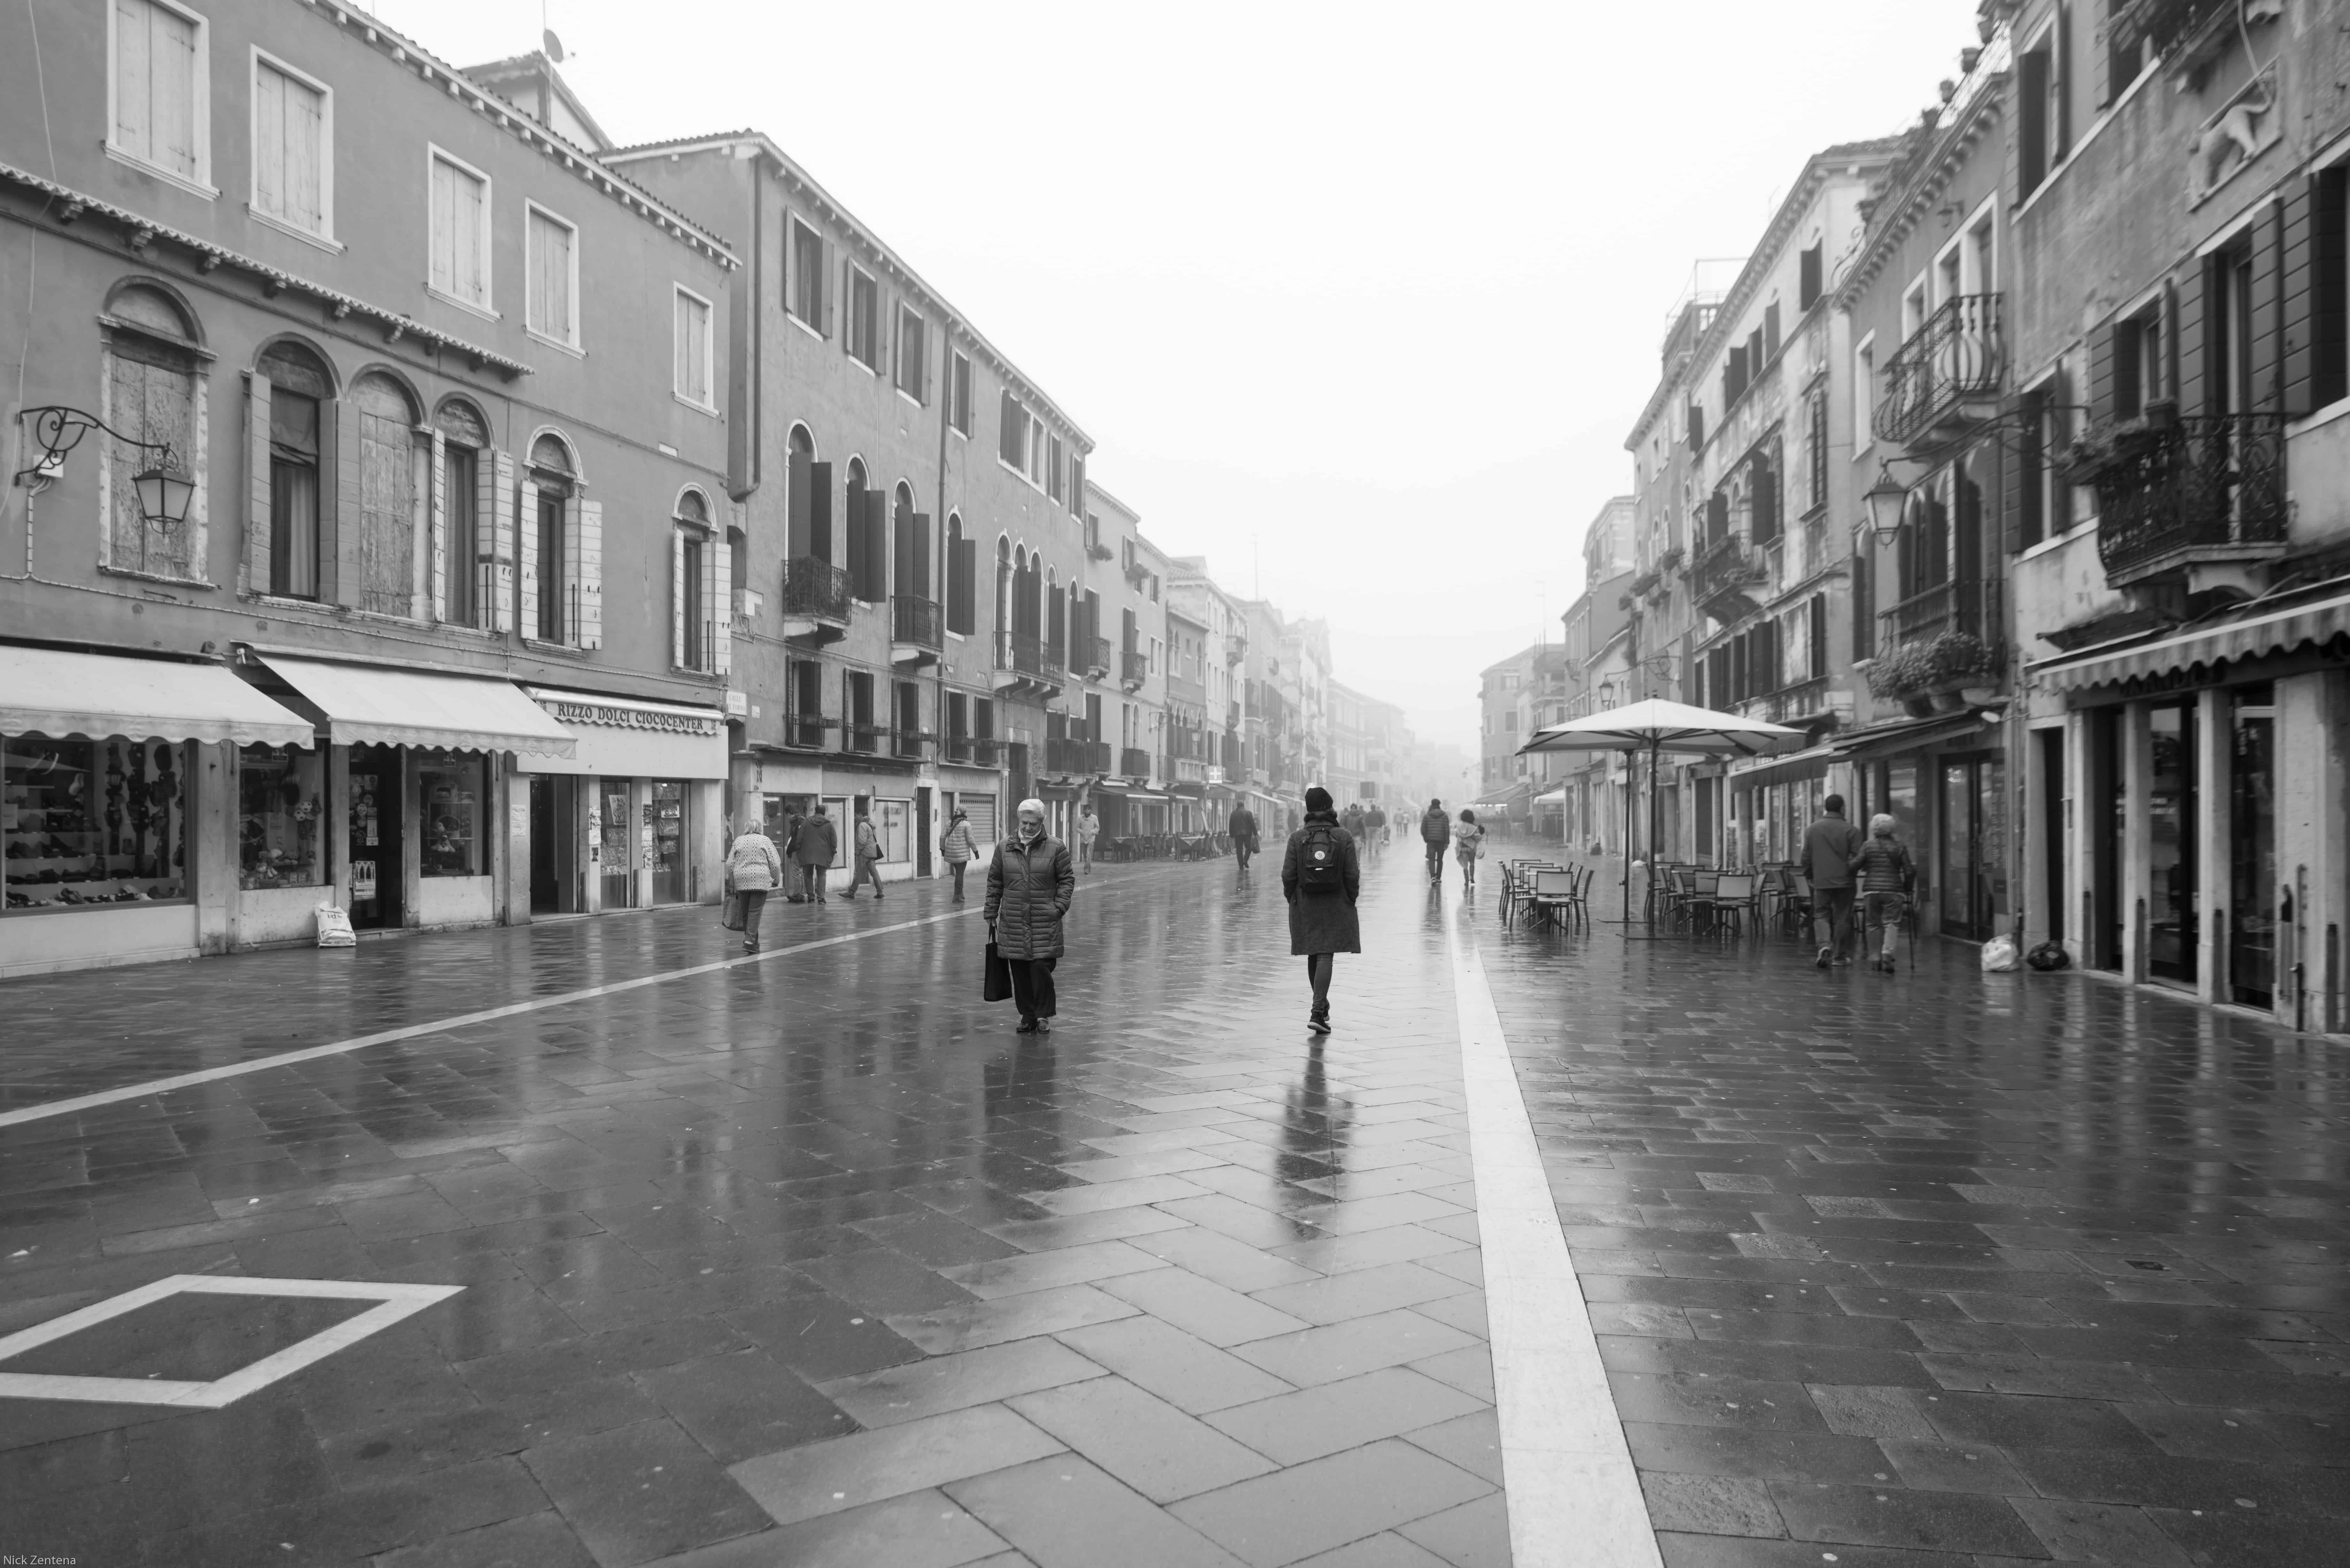 Venice Italy in the rain